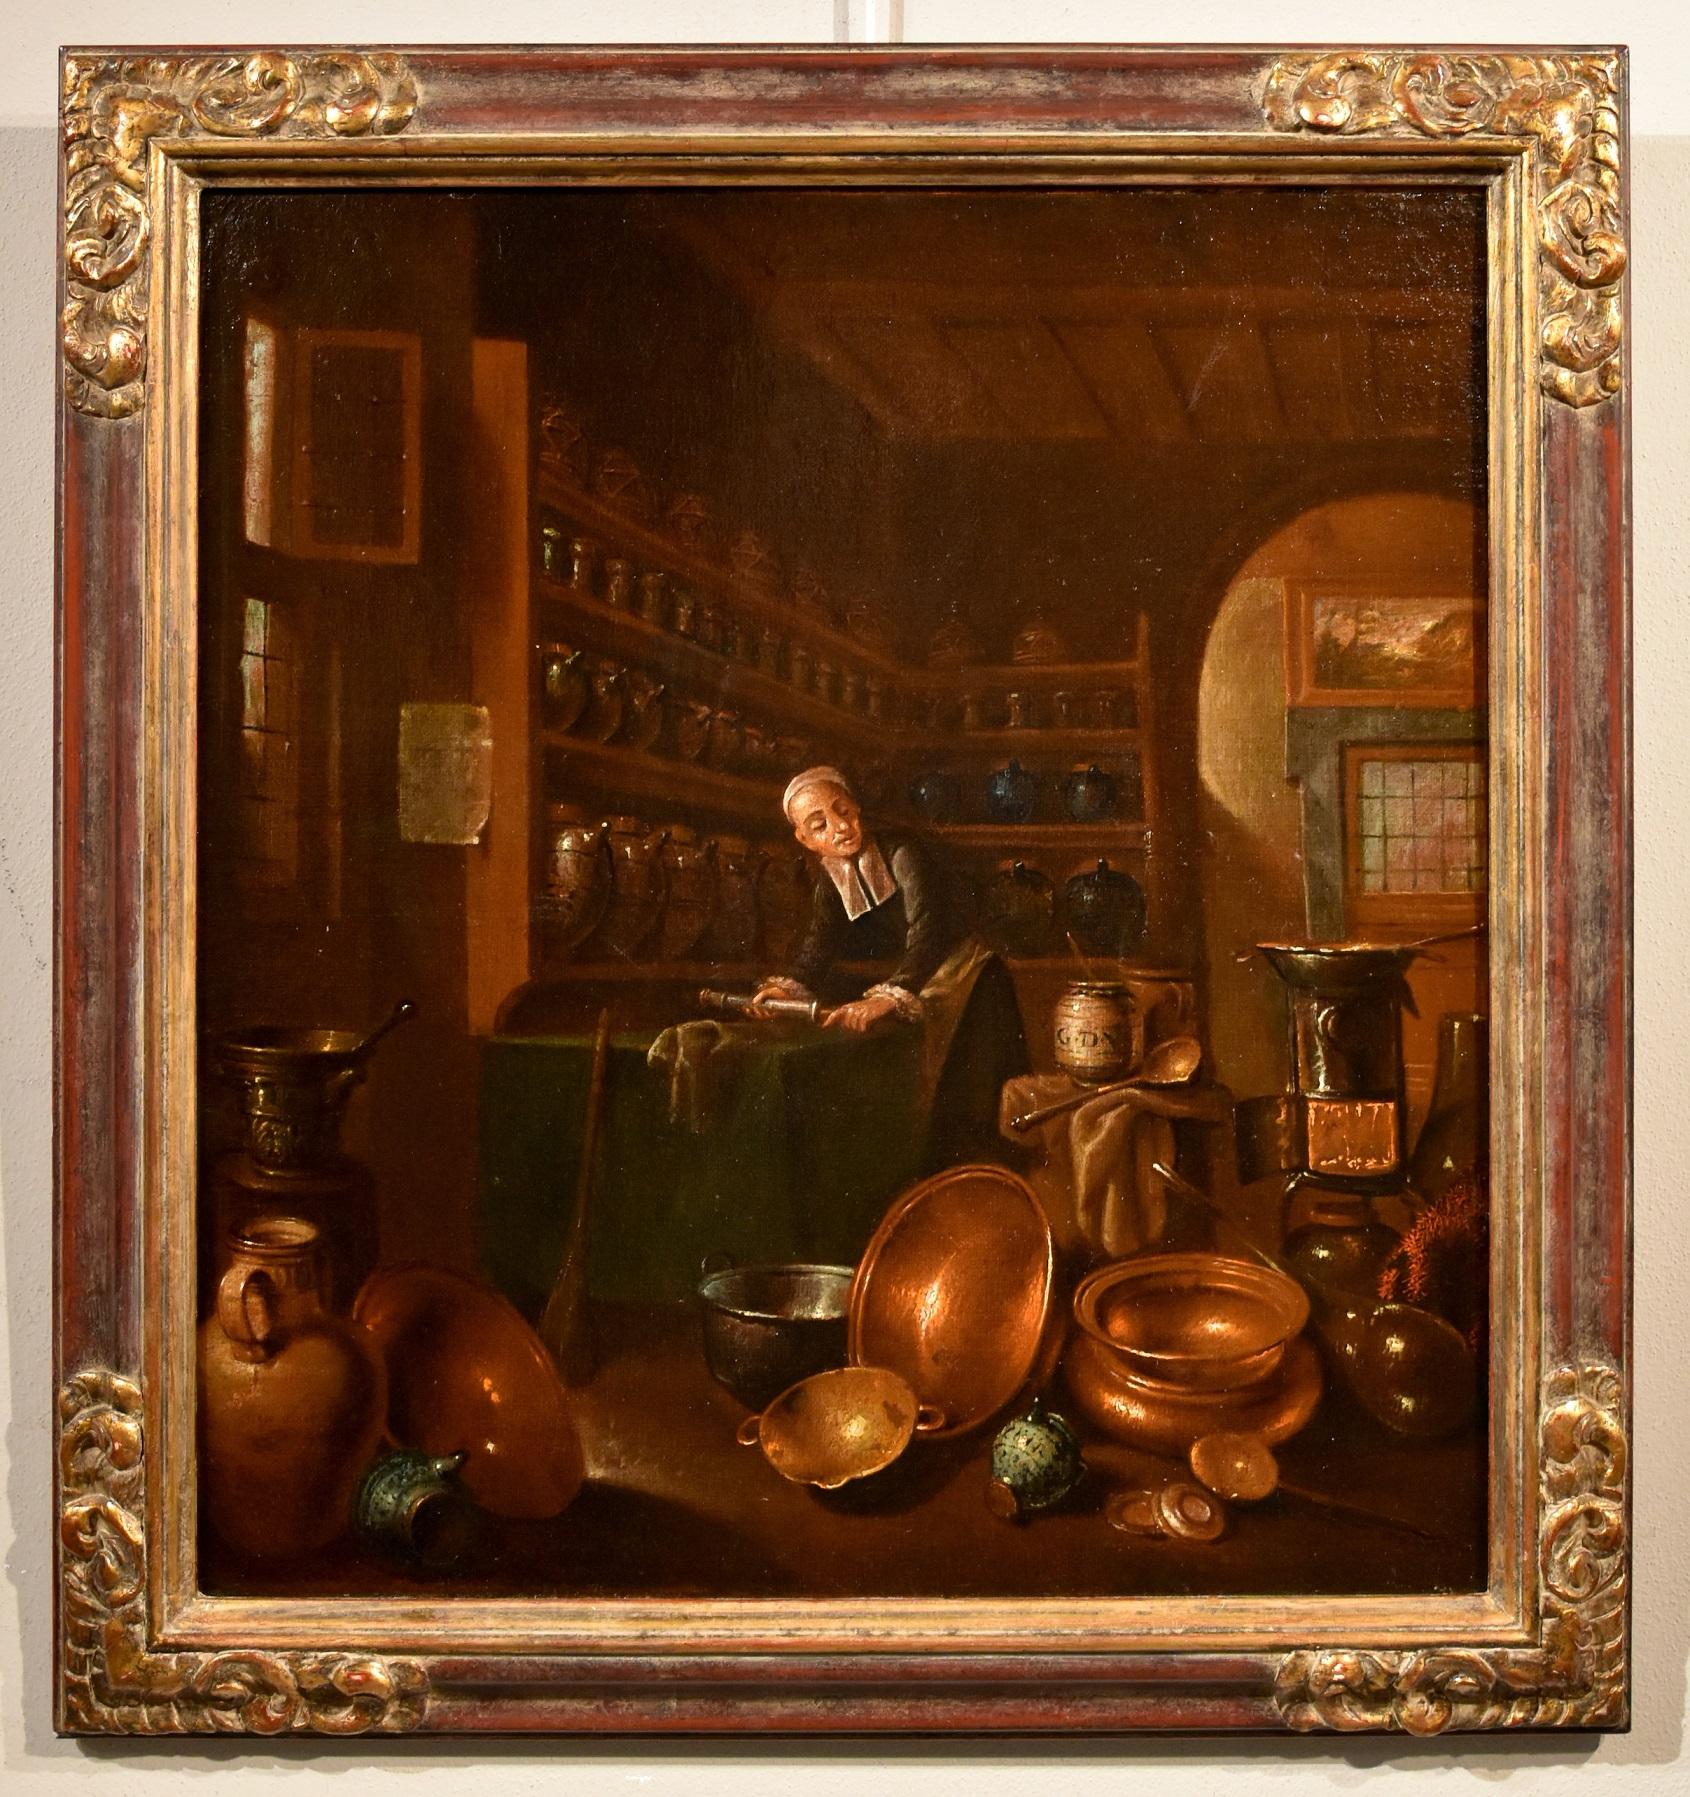 Pharmazist Valentino, signierte Farbe, Öl auf Leinwand, alter Meister, 17. Jahrhundert, Italien (Alte Meister), Painting, von Giovanni Domenico Valentino (Rome 1630 - Imola 1708)